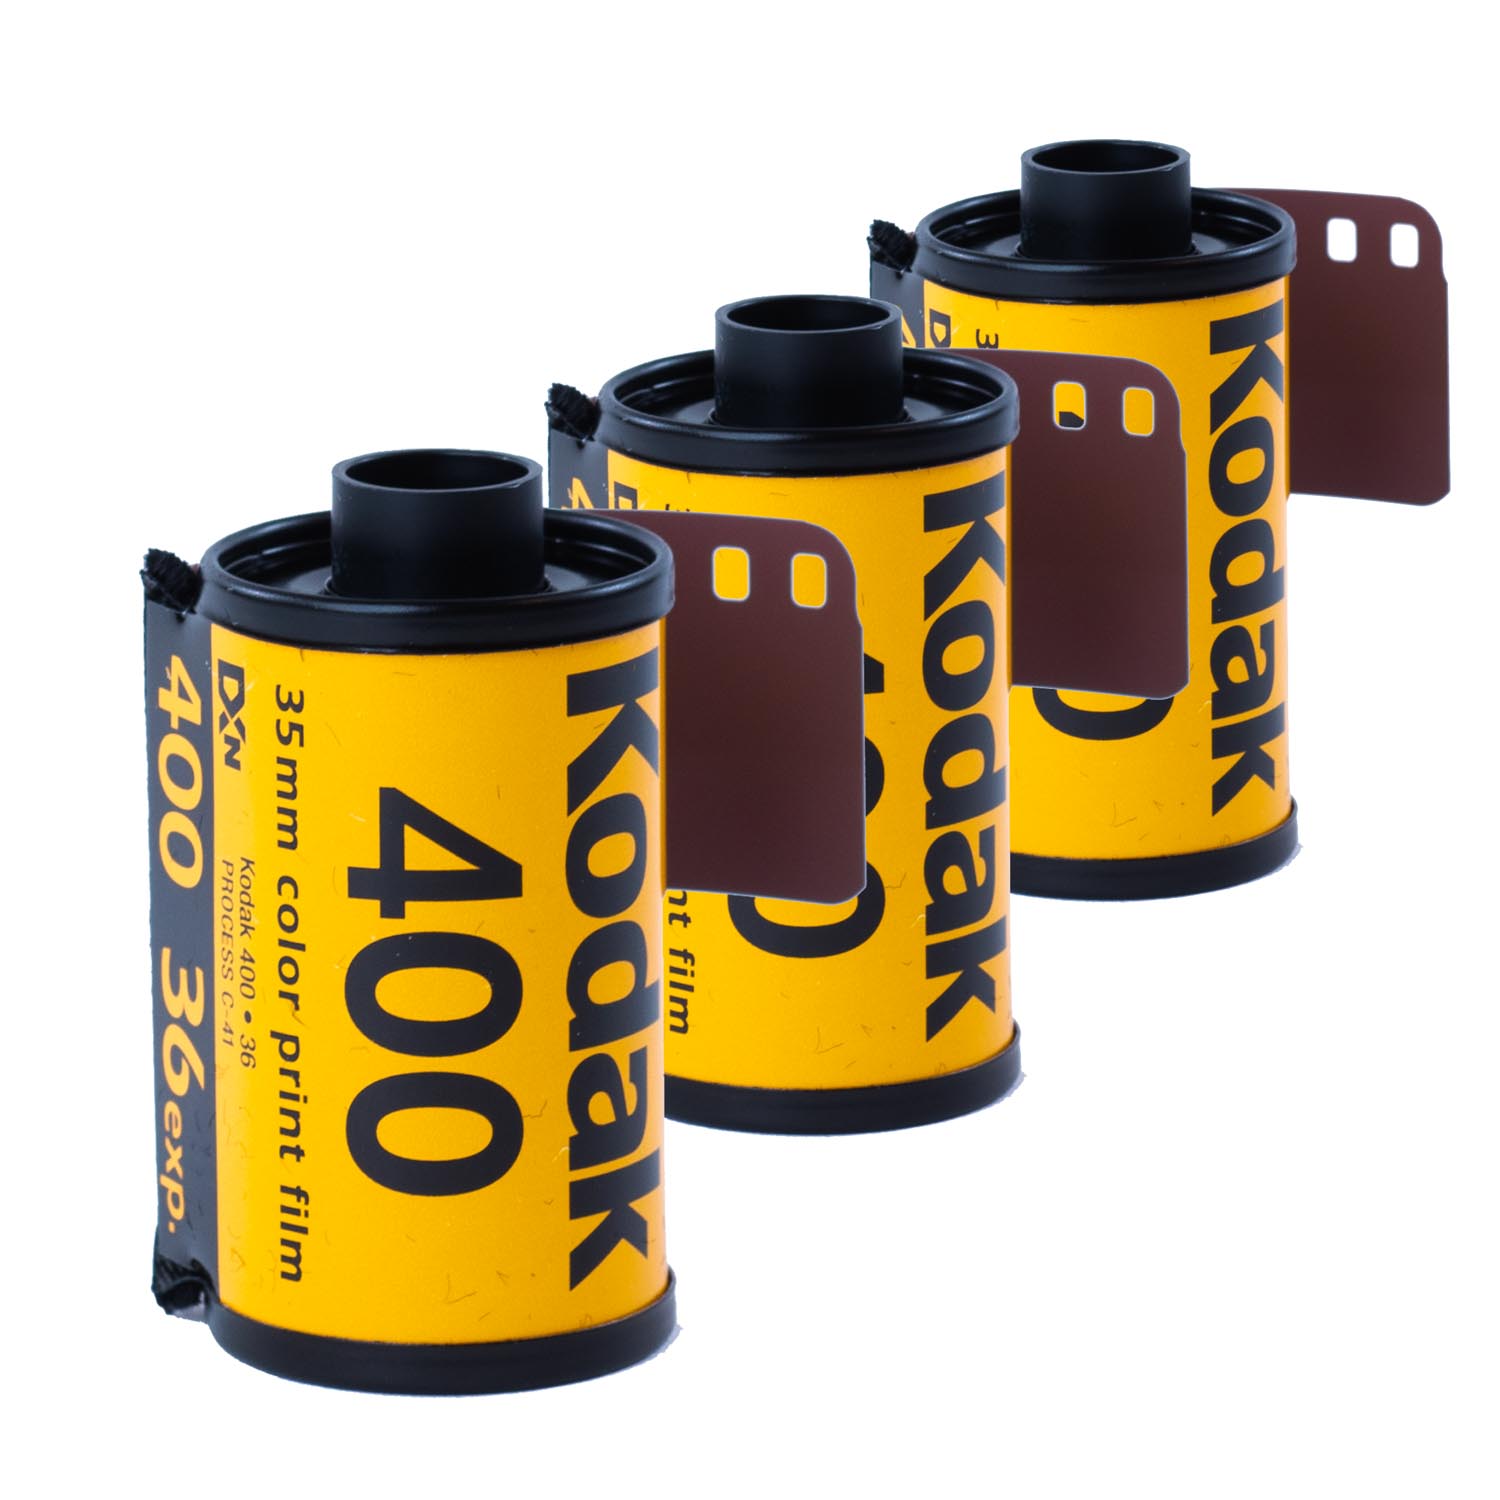 Kodak Ultramax 400 - 135-36 (3 rolls)